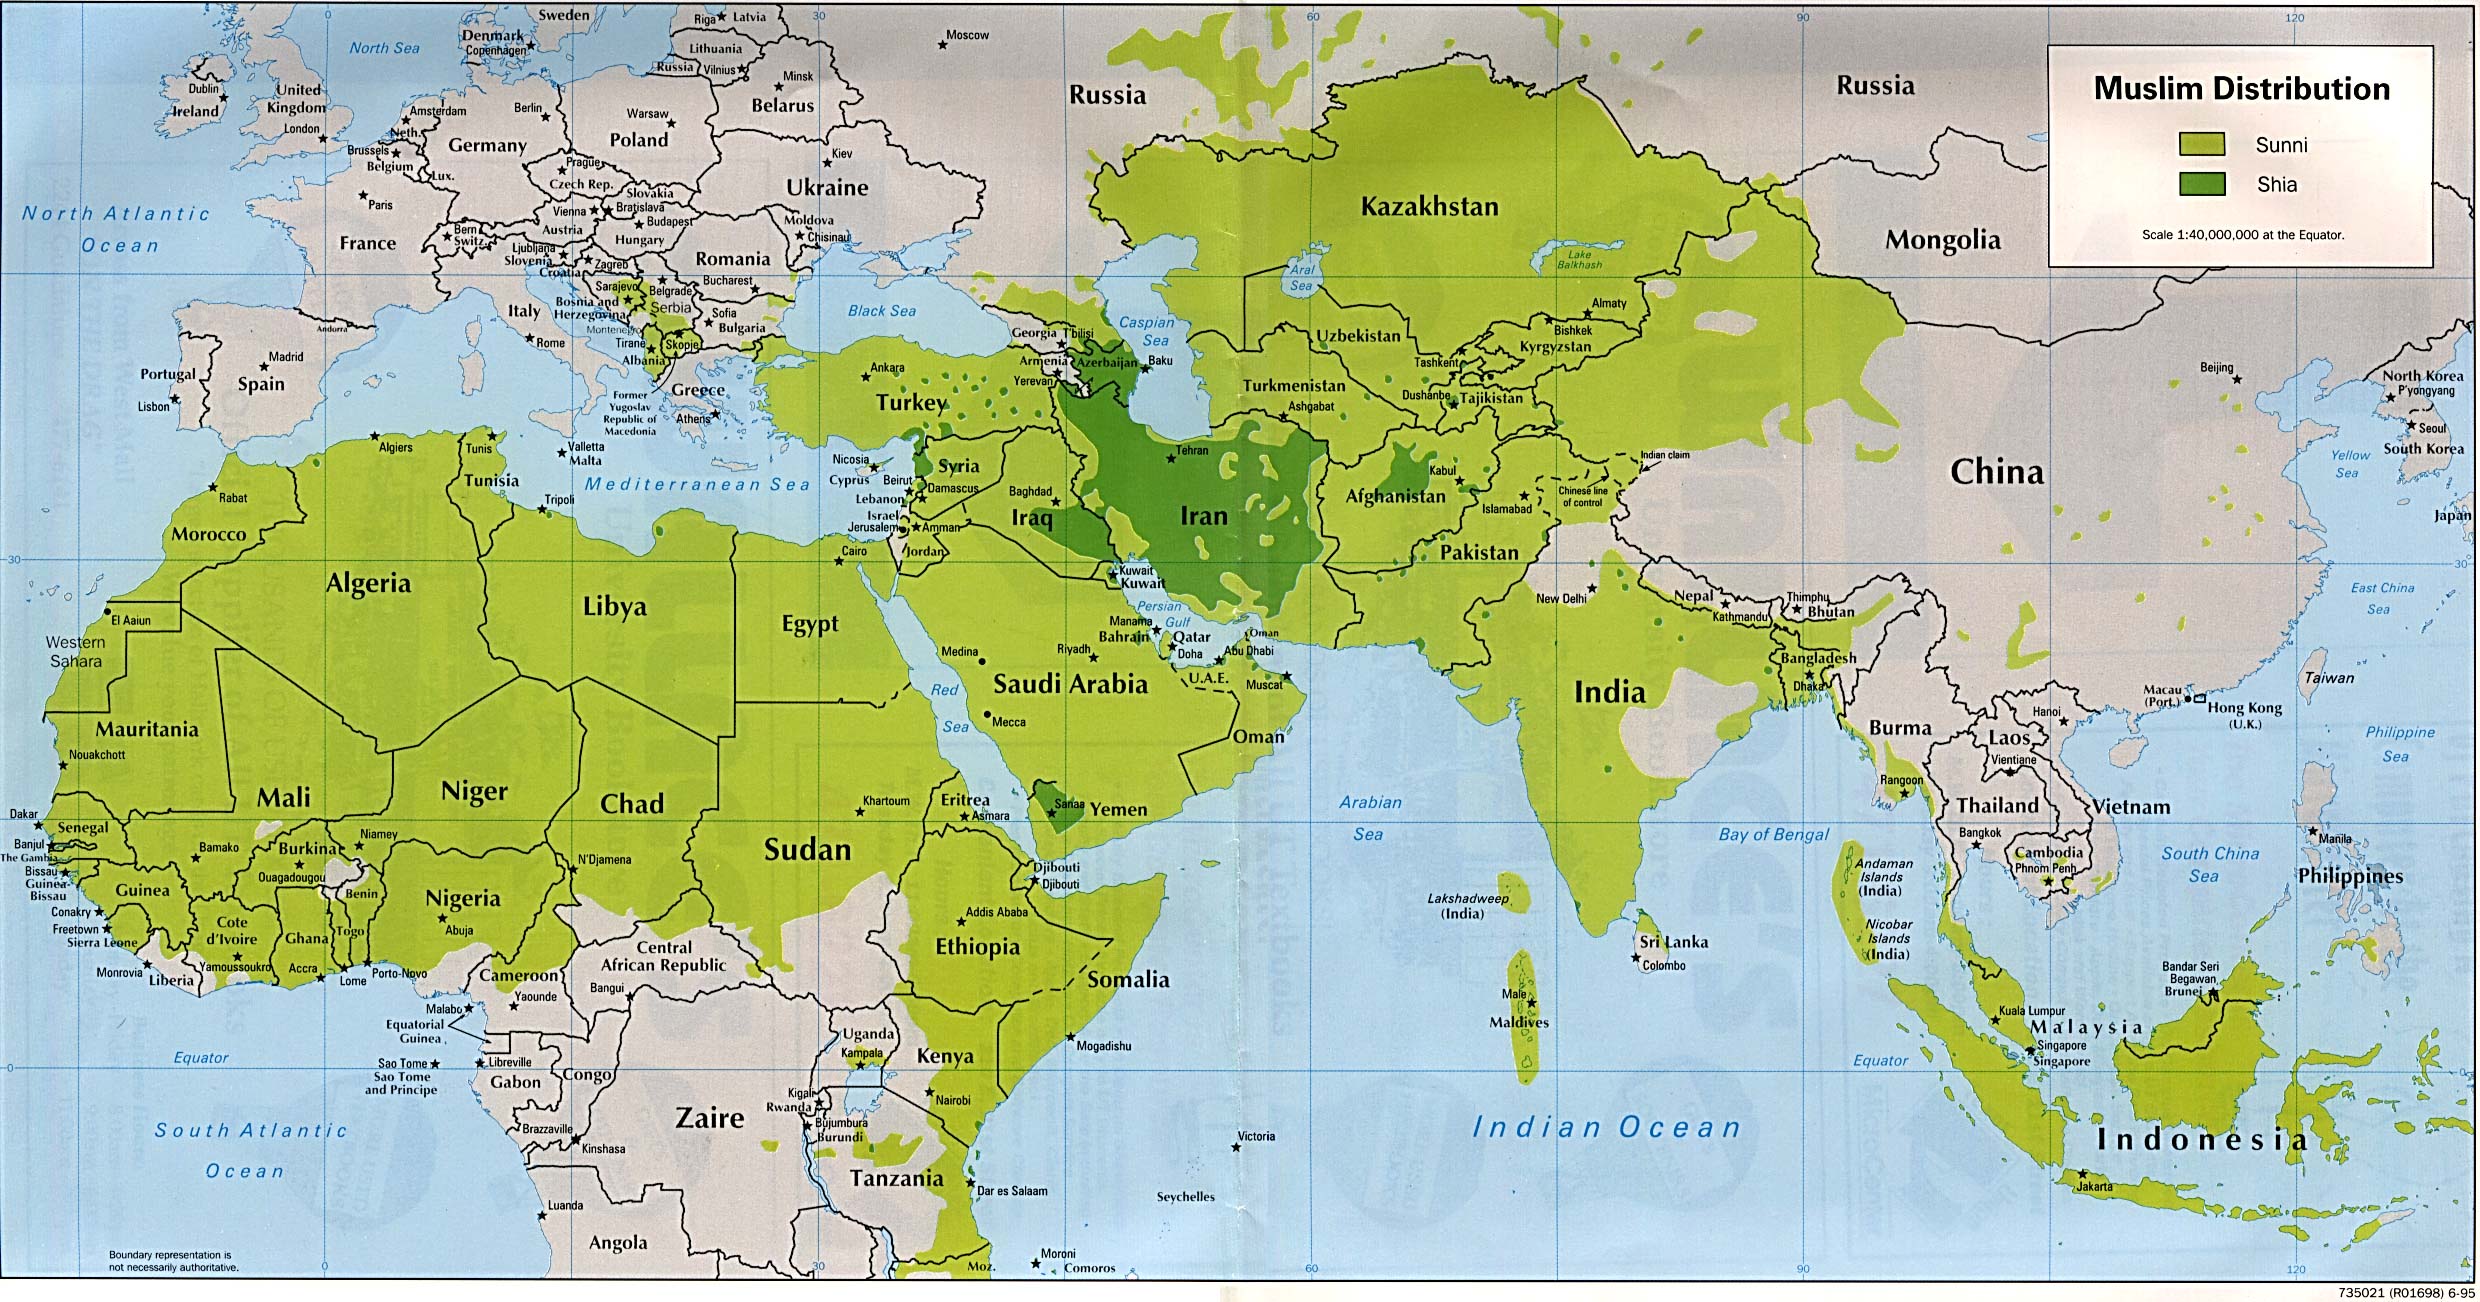 Map Of The World. Muslim Distribution (Sunni and Shia) 1995 (557K) 